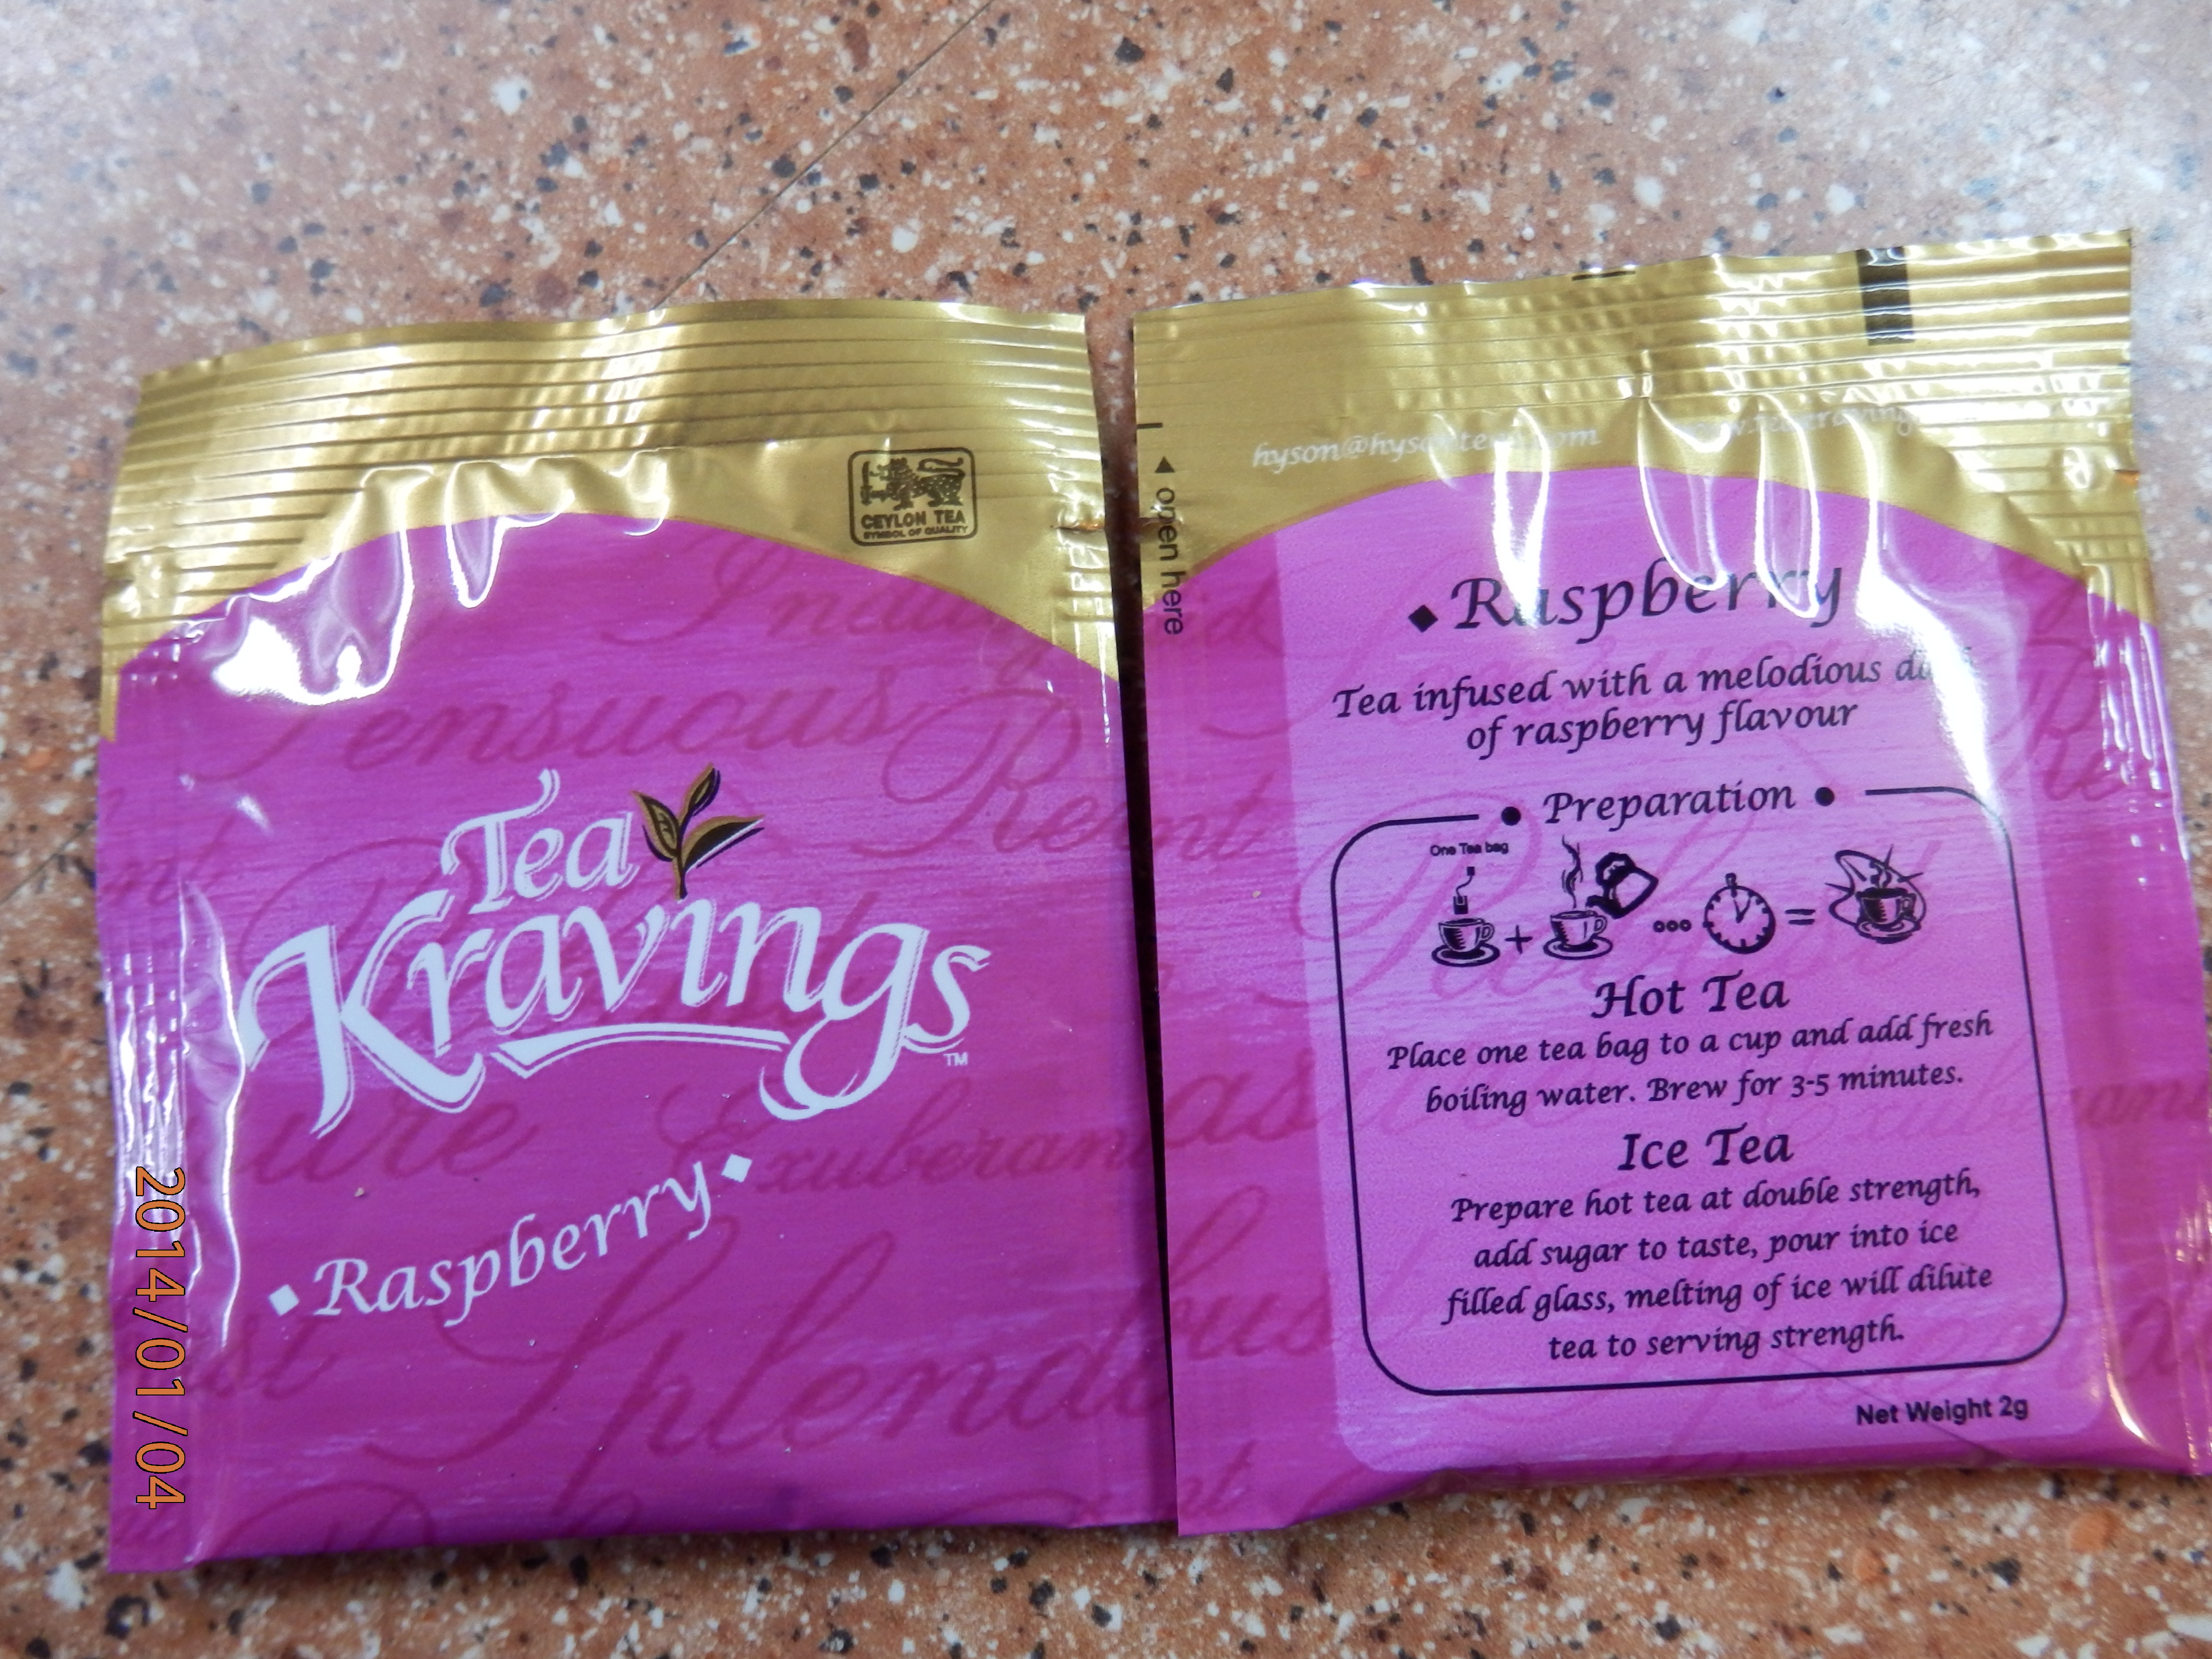 Tea Kravings - Raspberry